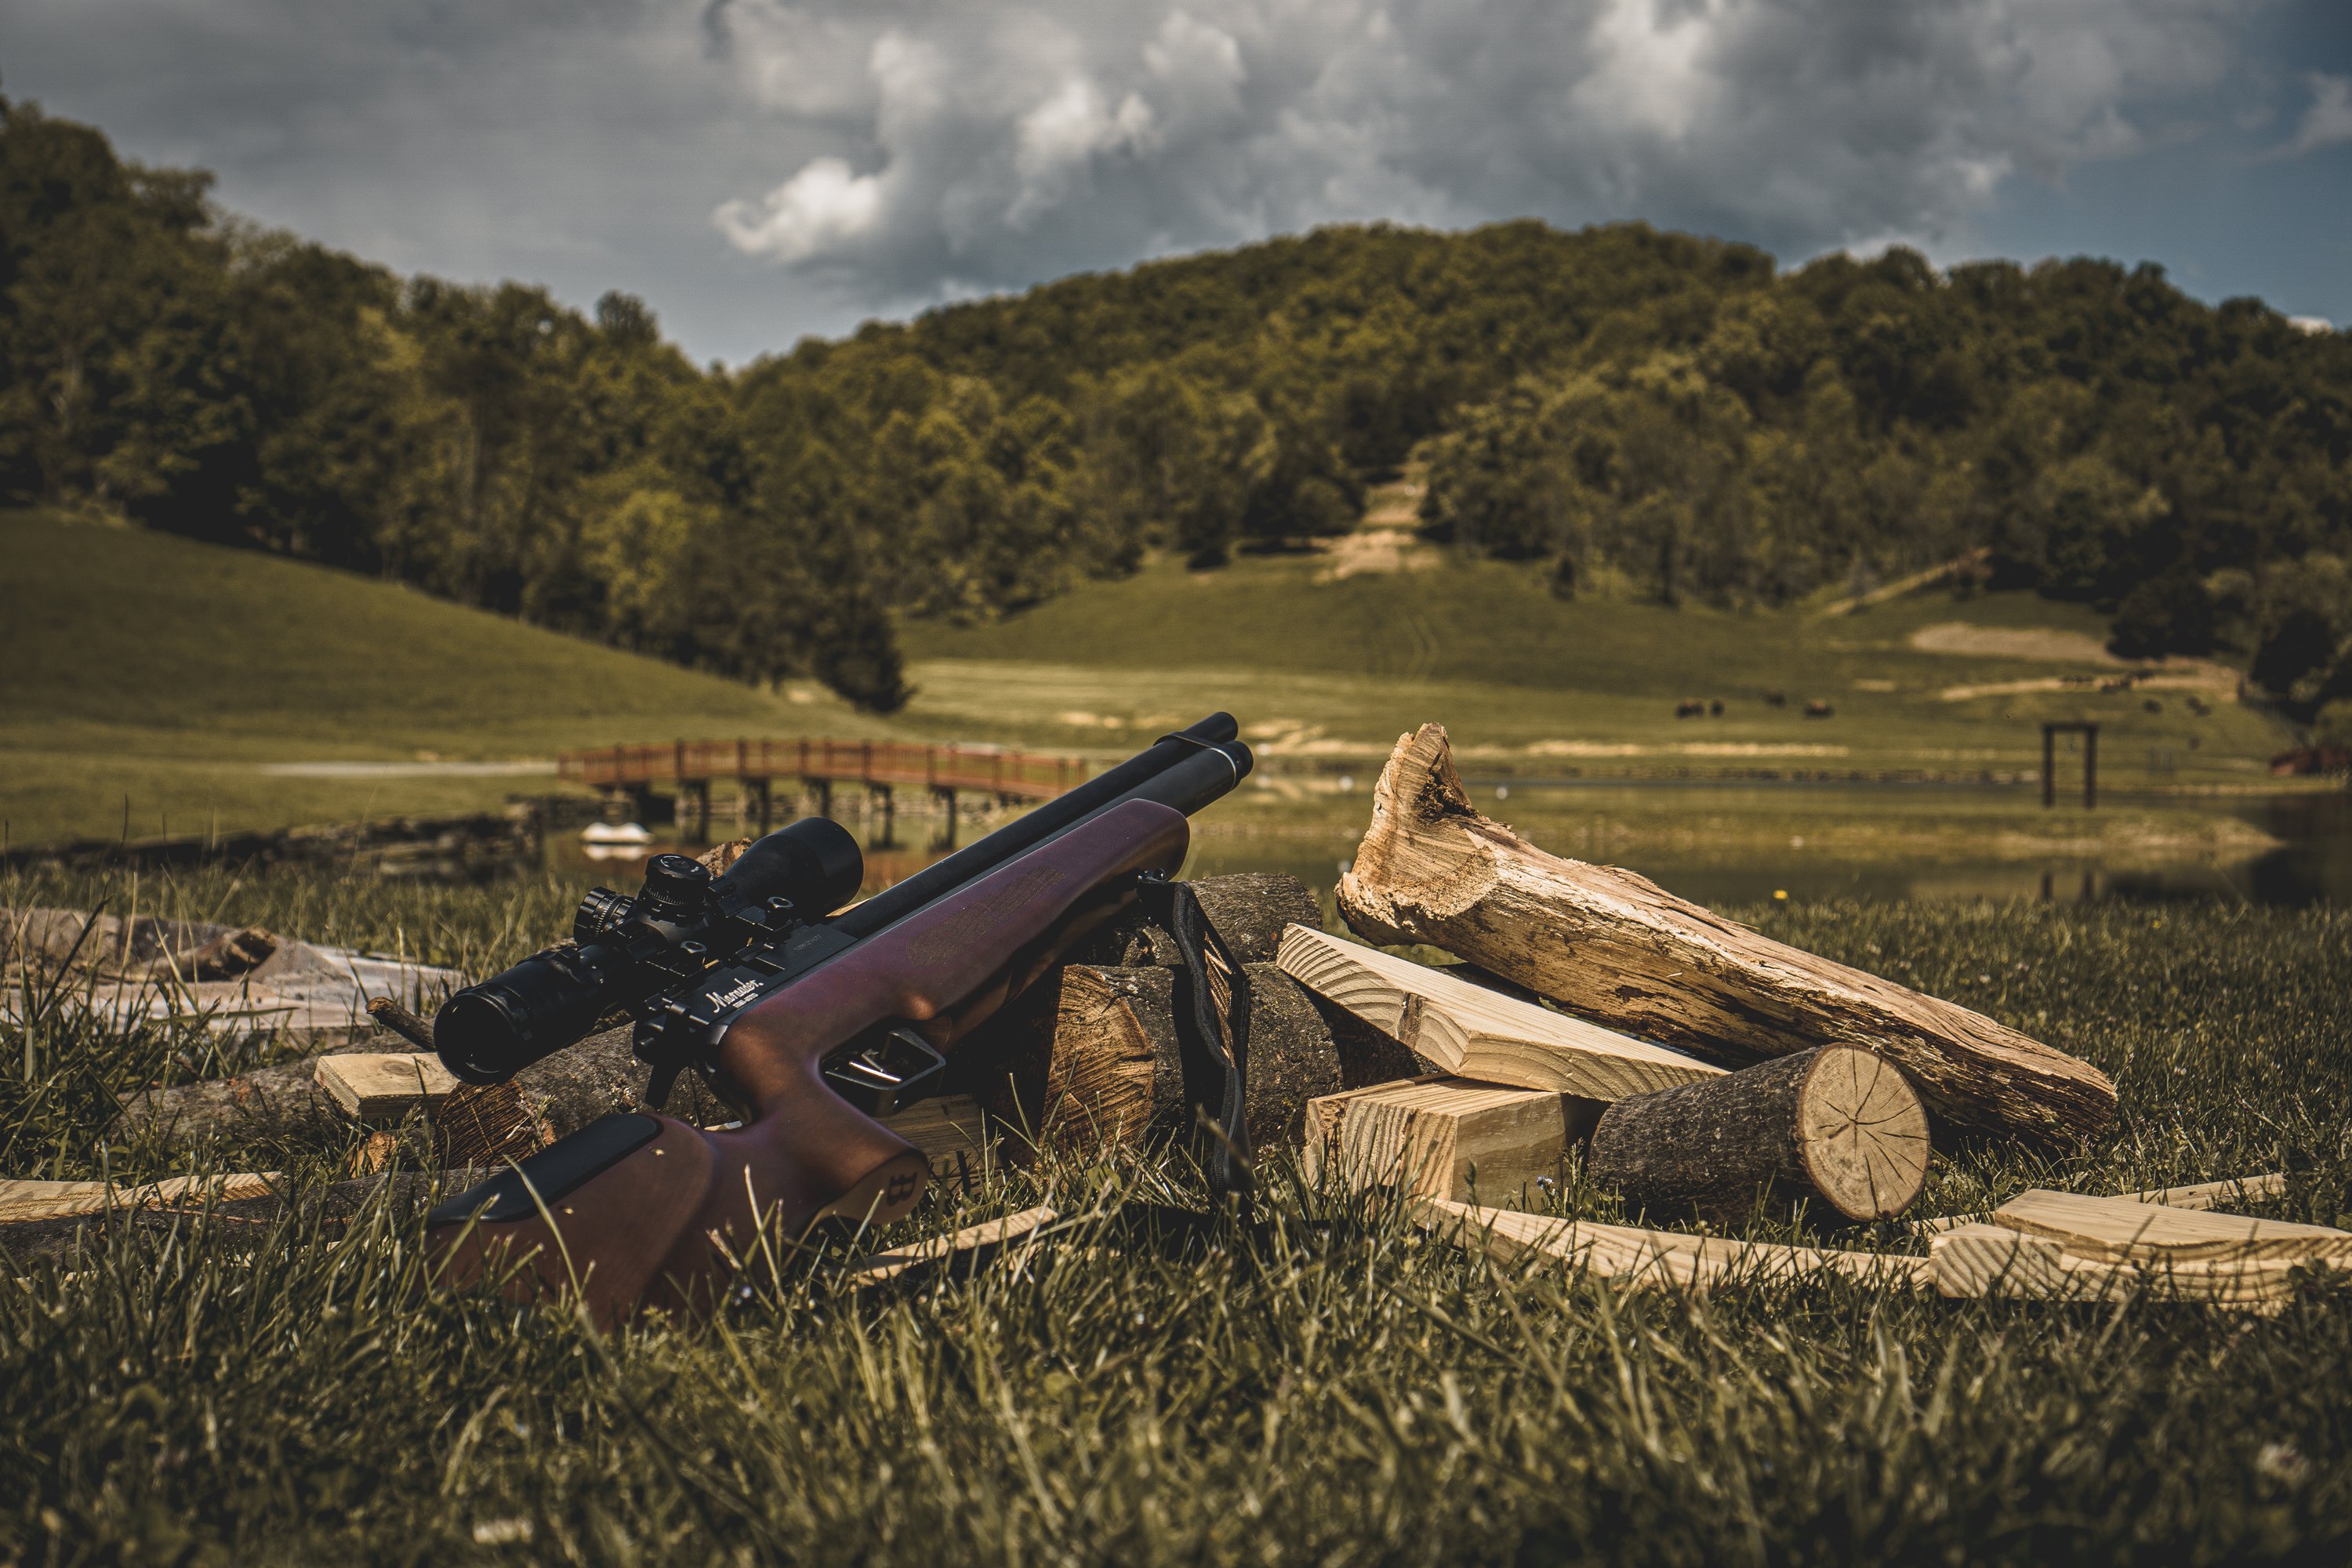 A Benjamin Marauder air rifle overlooking a rural field